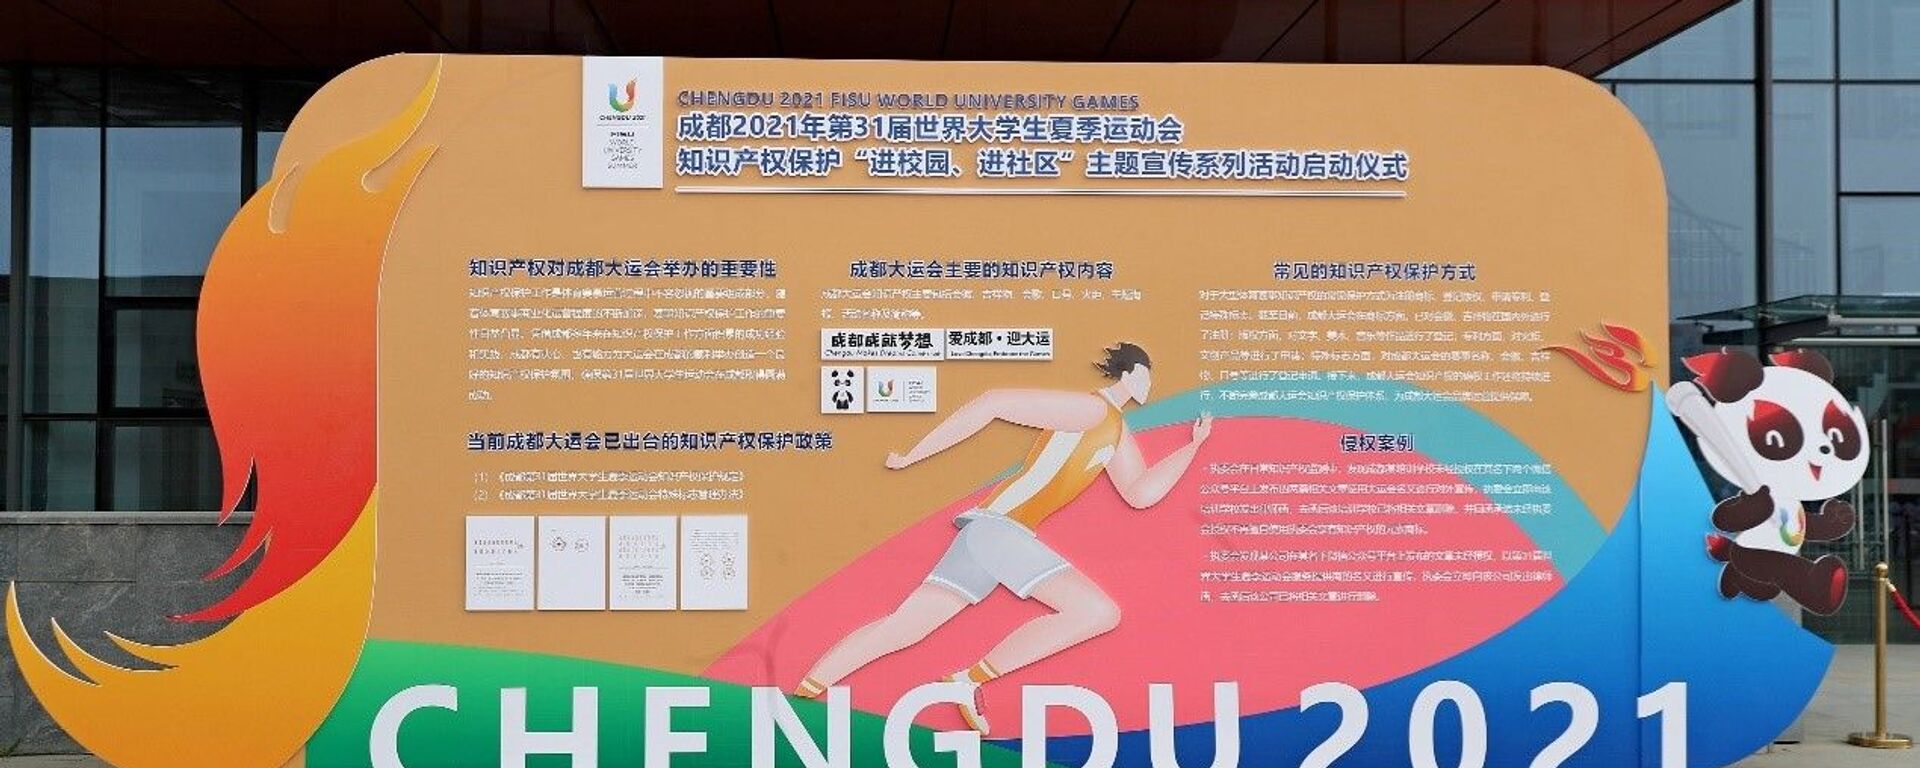 Chengdu 2021 31st Summer Universiade - 俄罗斯卫星通讯社, 1920, 25.06.2022